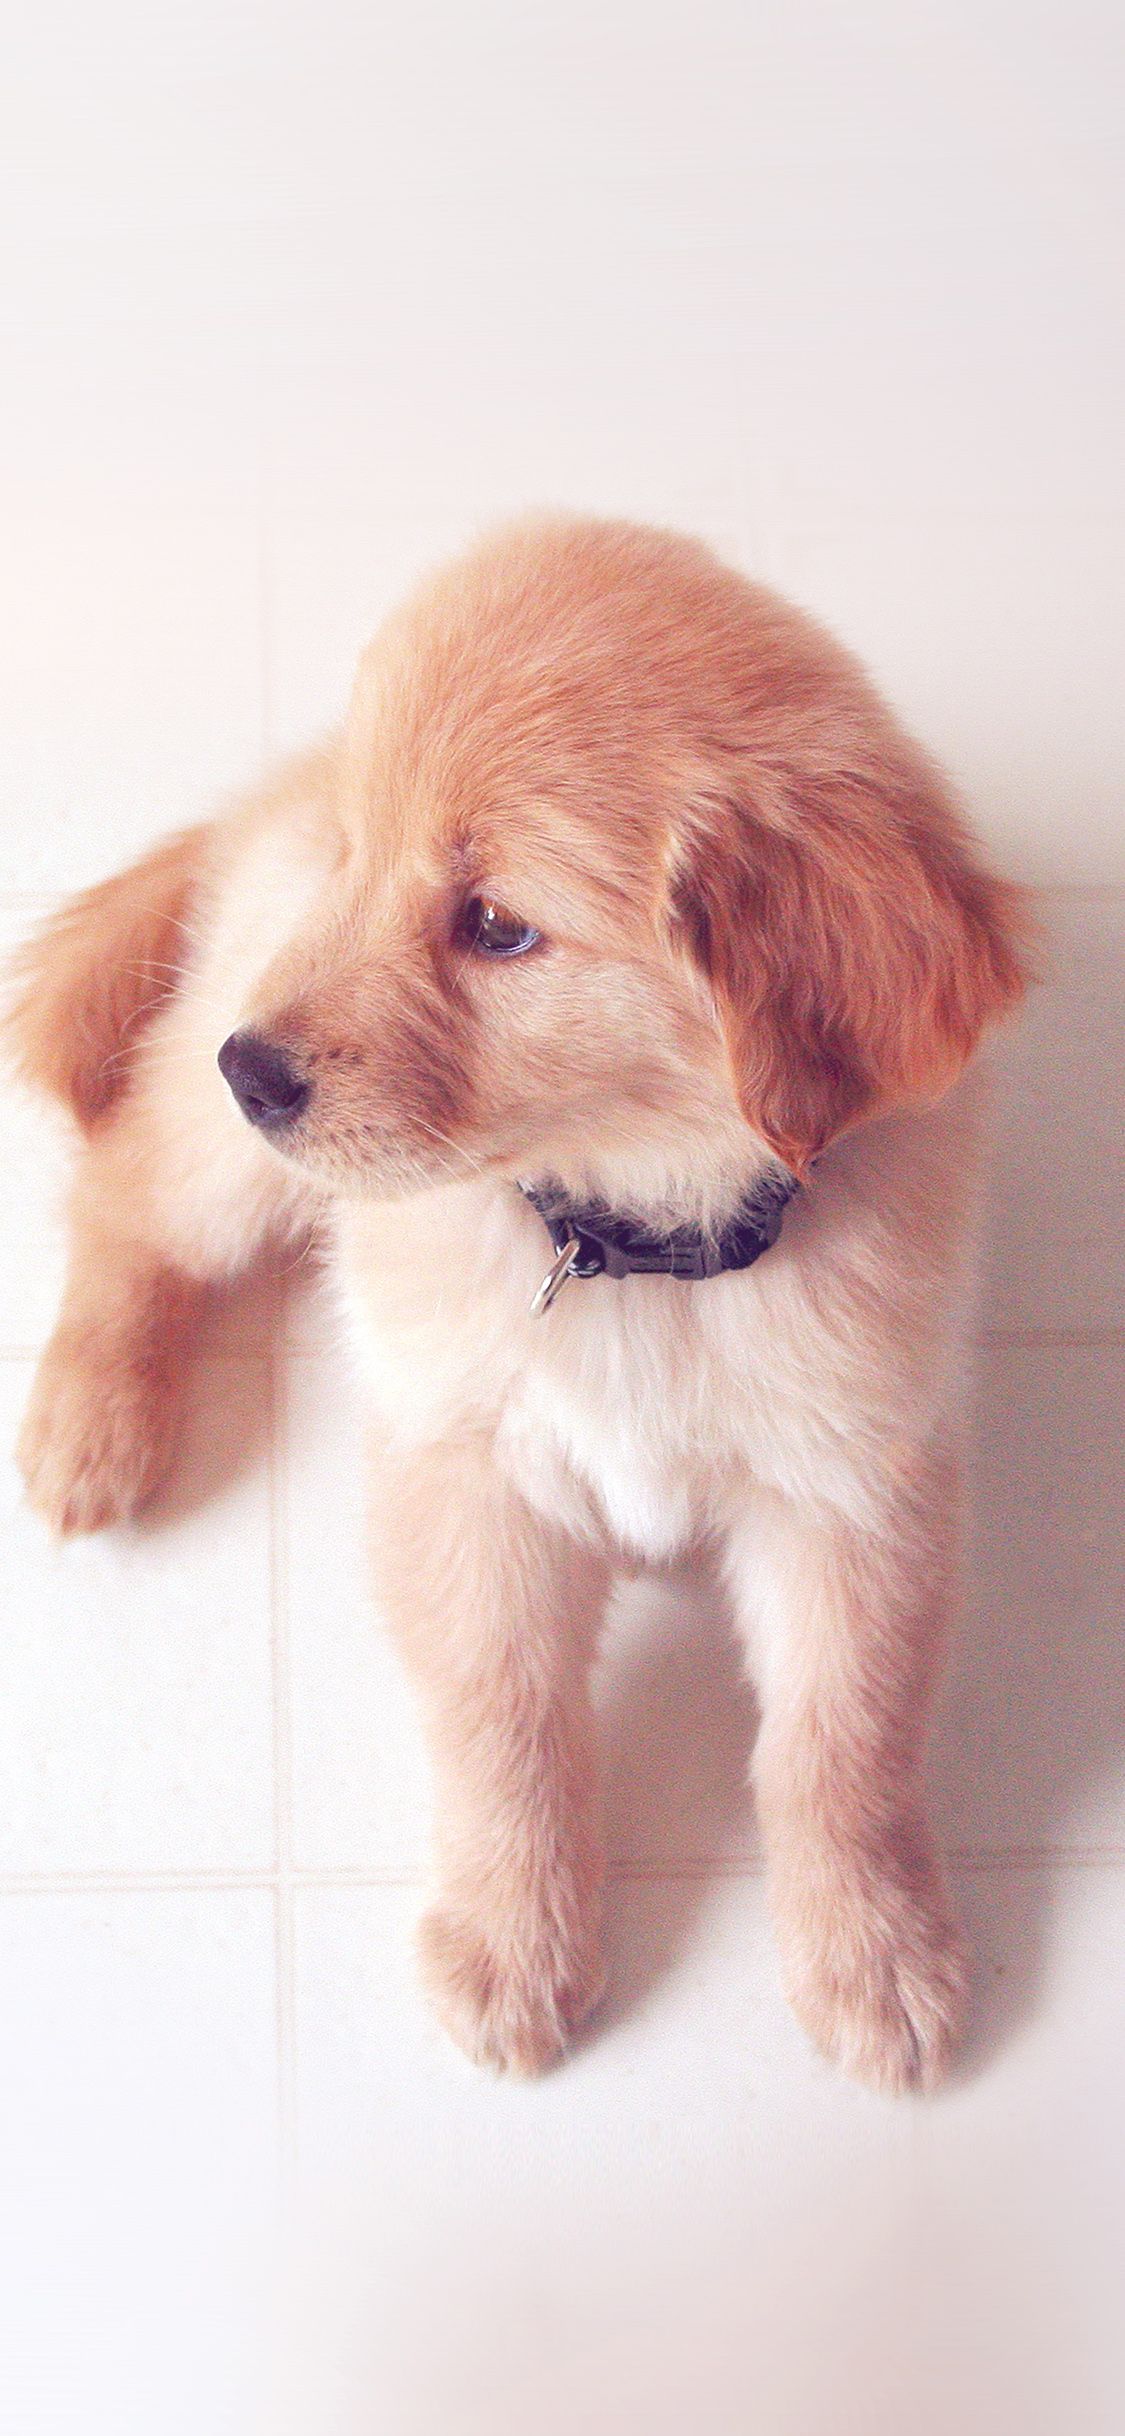 بهترین عکس پروفایل بانمک سگ کوچولو مناسب واتساپ